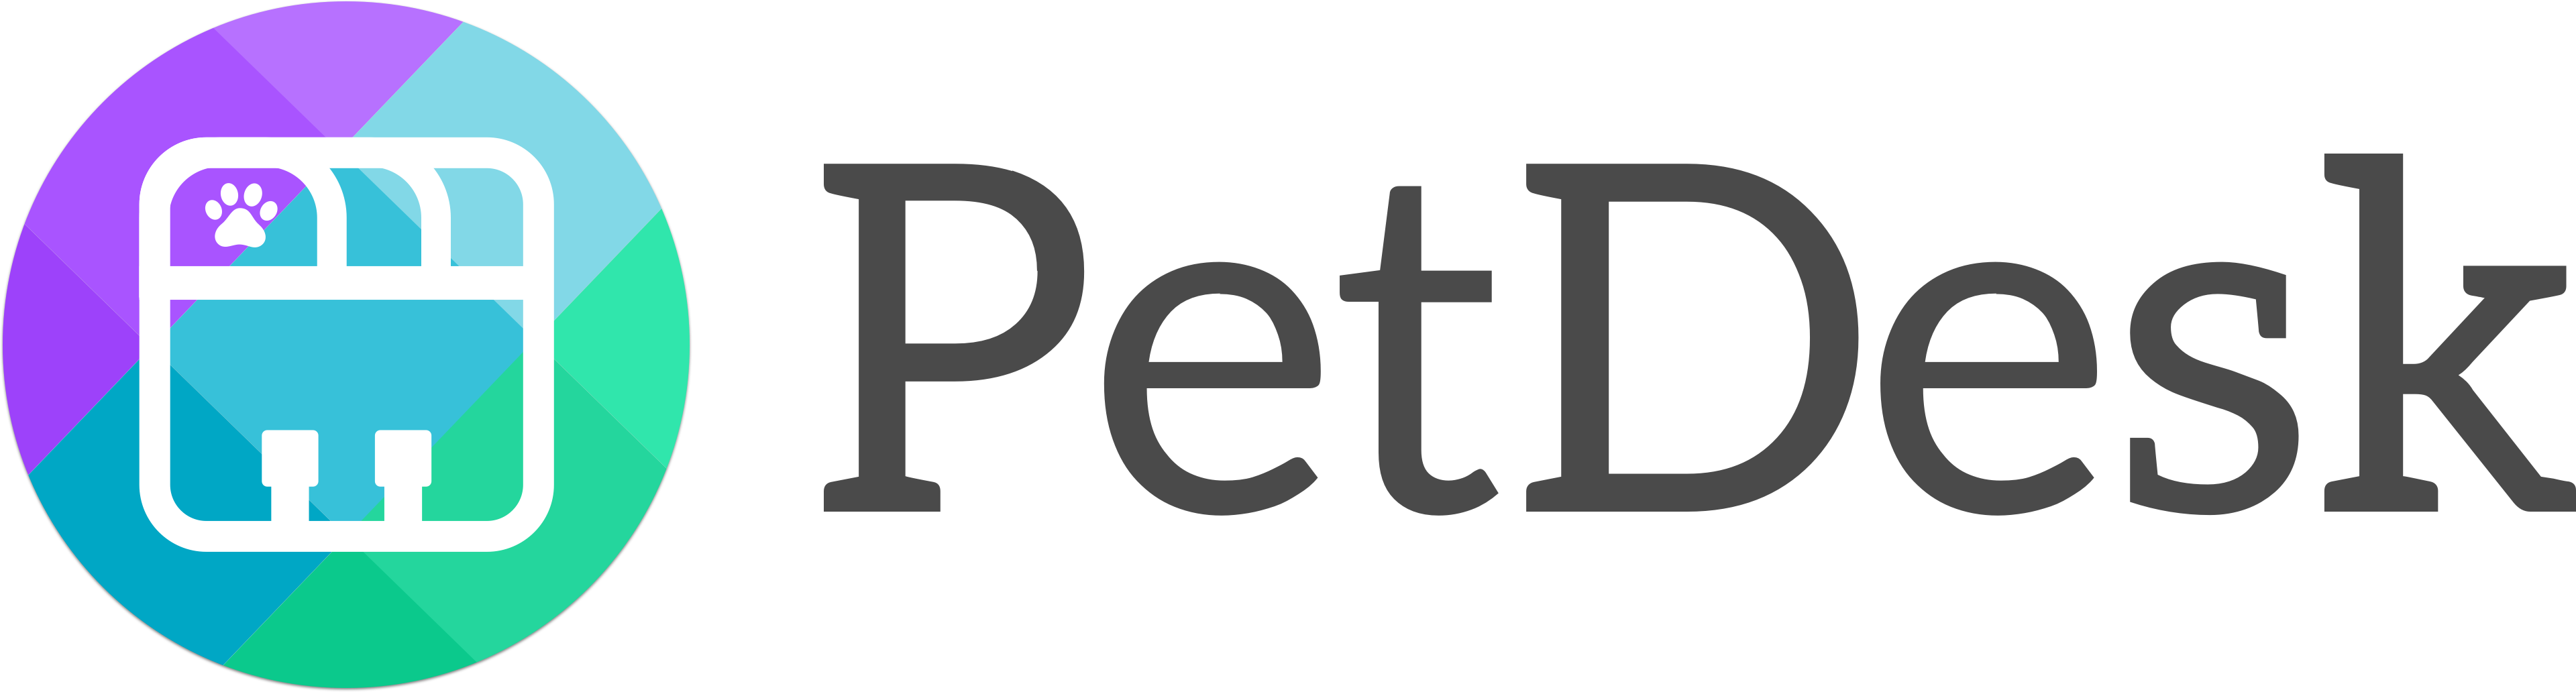 PetDesk-メインロゴ